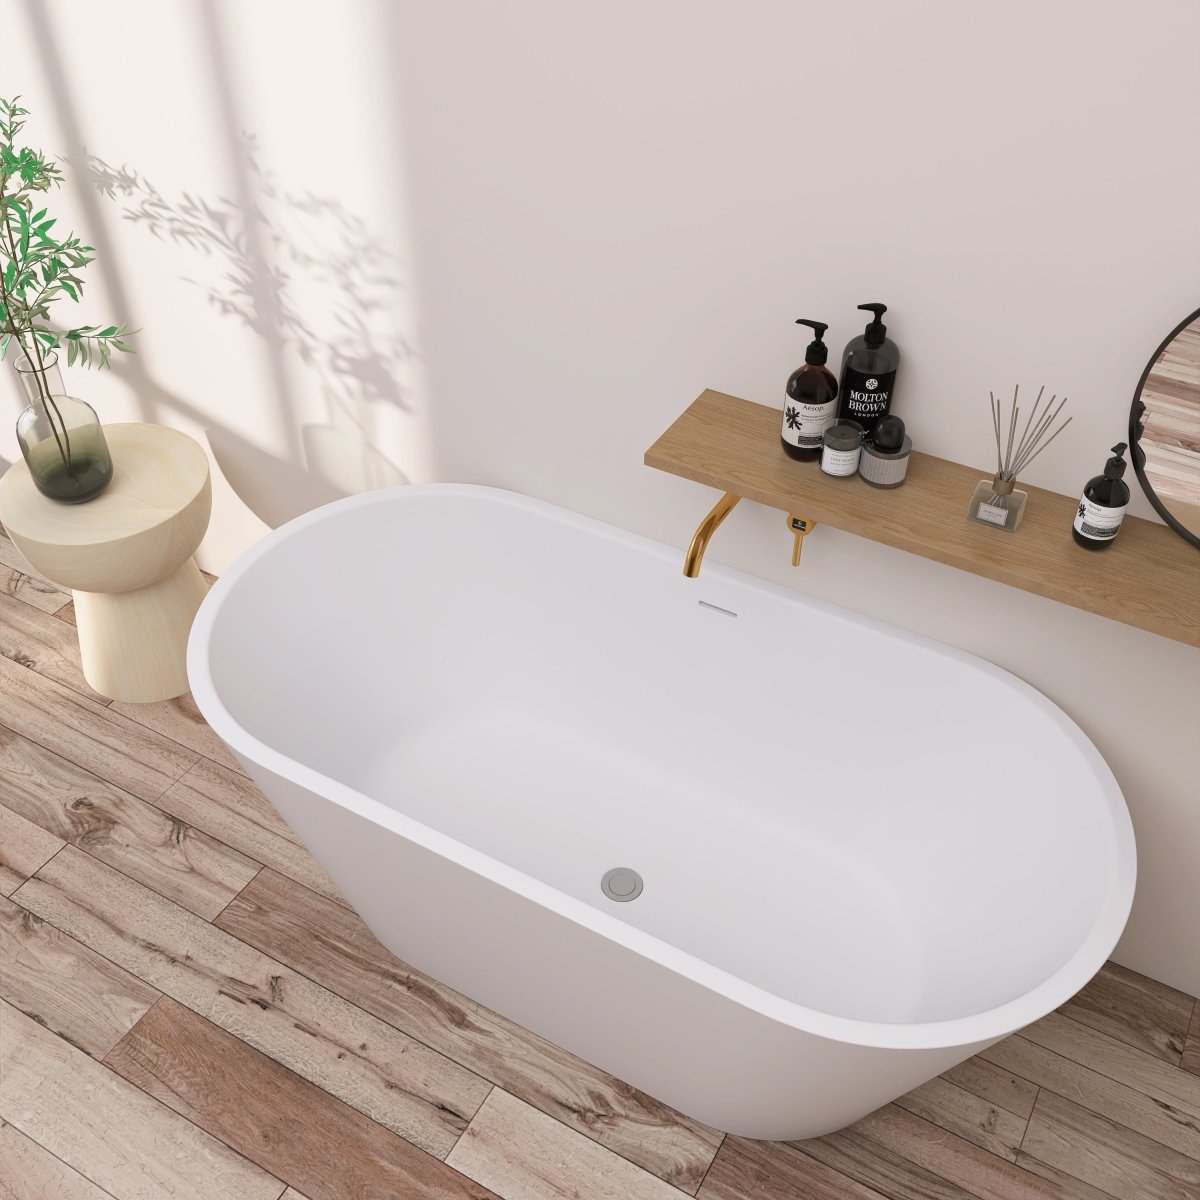 ExBrite 63" Acrylic Free Standing Tub Classic Oval Shape Soaking Tub, Adjustable Freestanding Bathtubs Gloss White